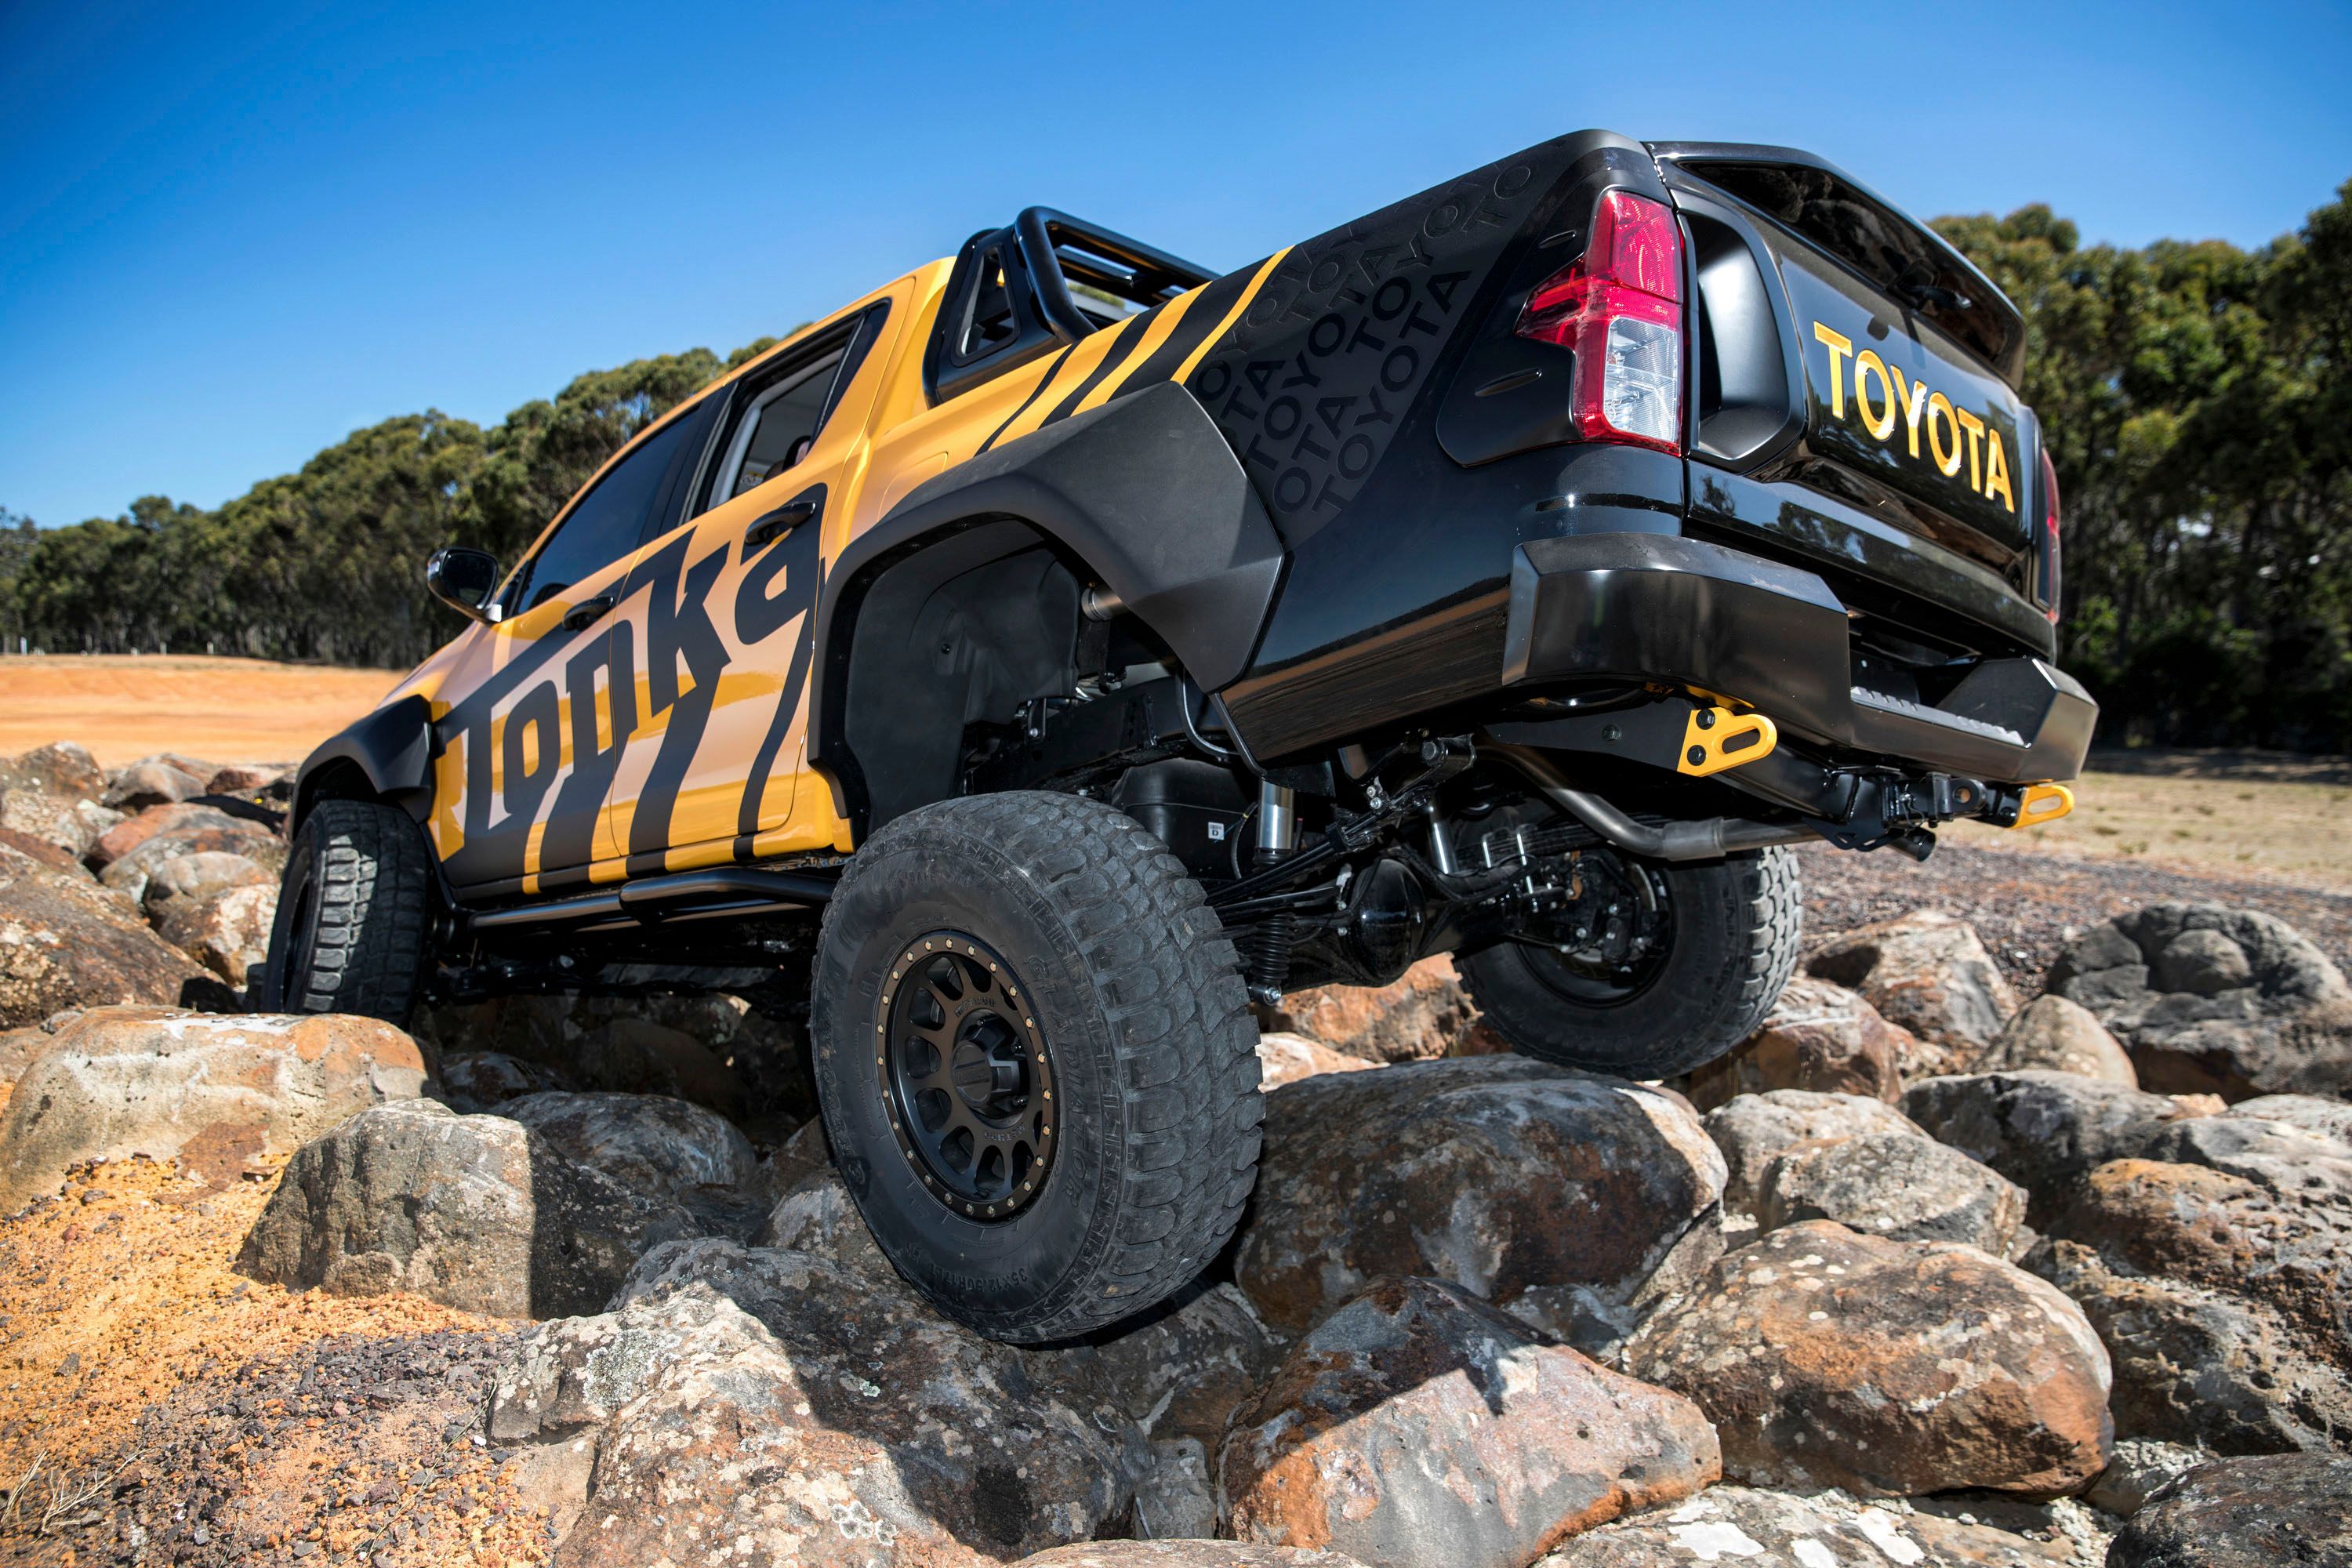 2017 Toyota Hilux Tonka Concept